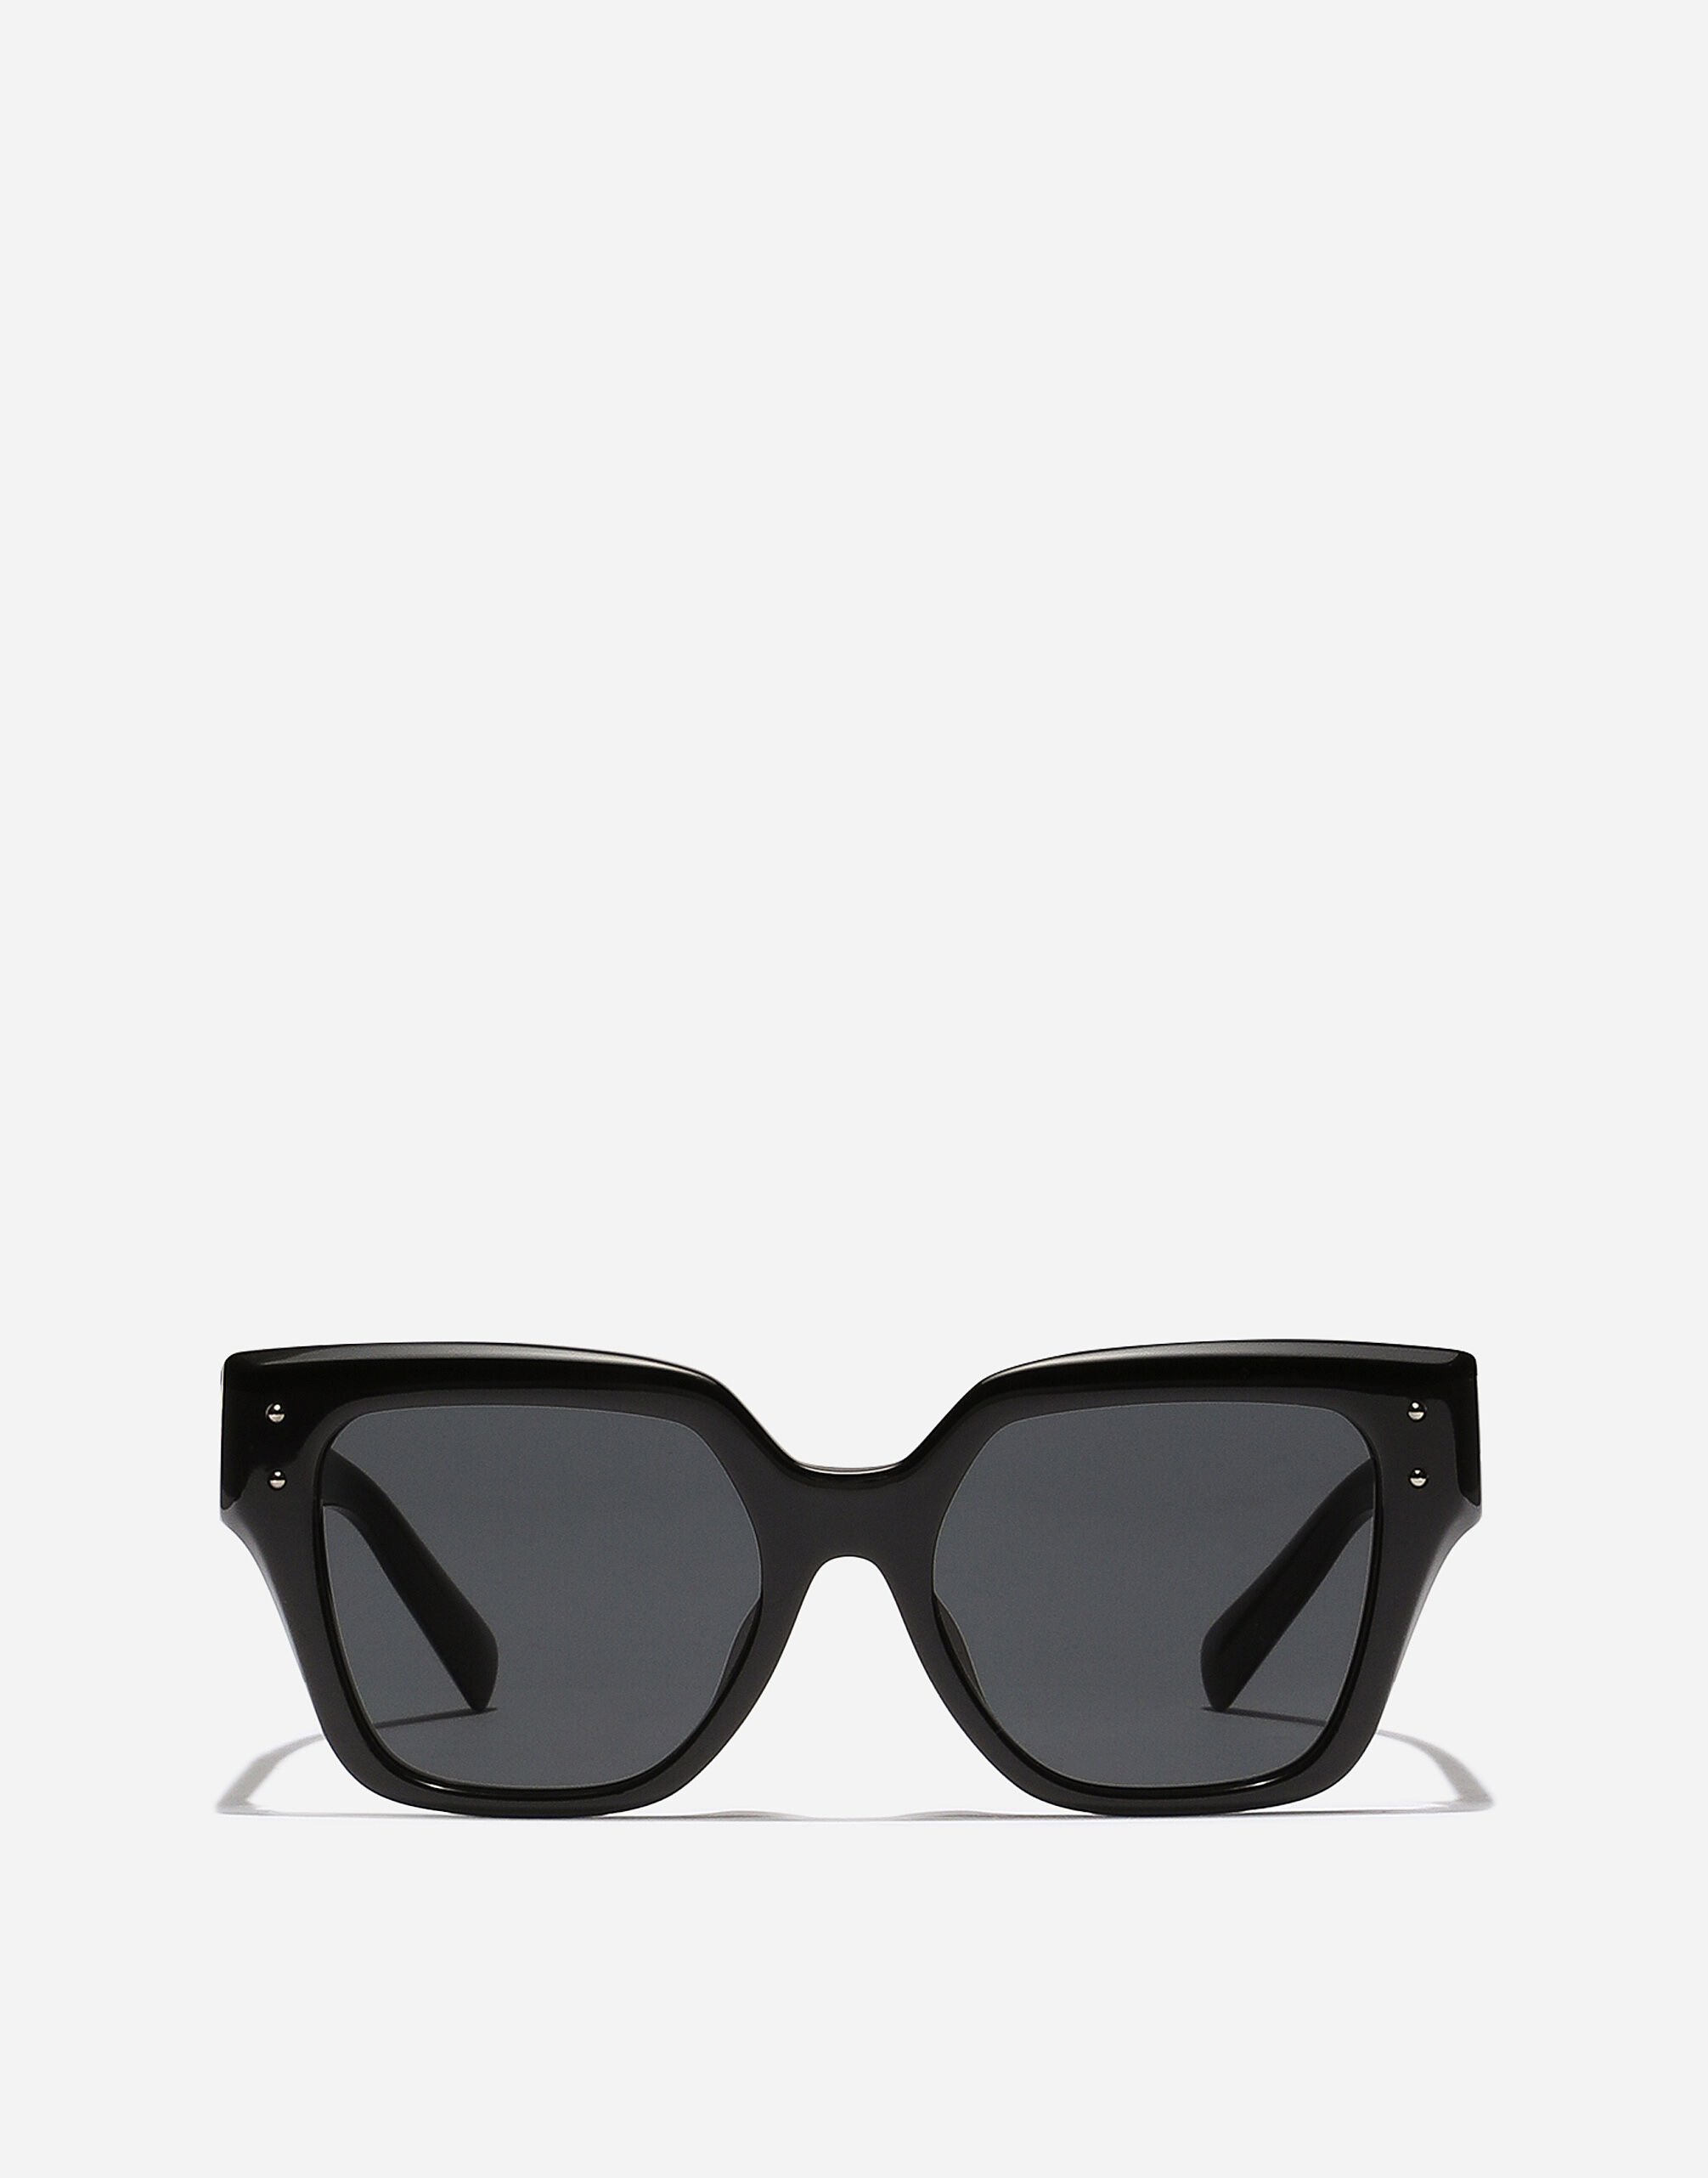 Dolce&Gabbana DG Sharped  Sunglasses Silver WEP6S0W1111